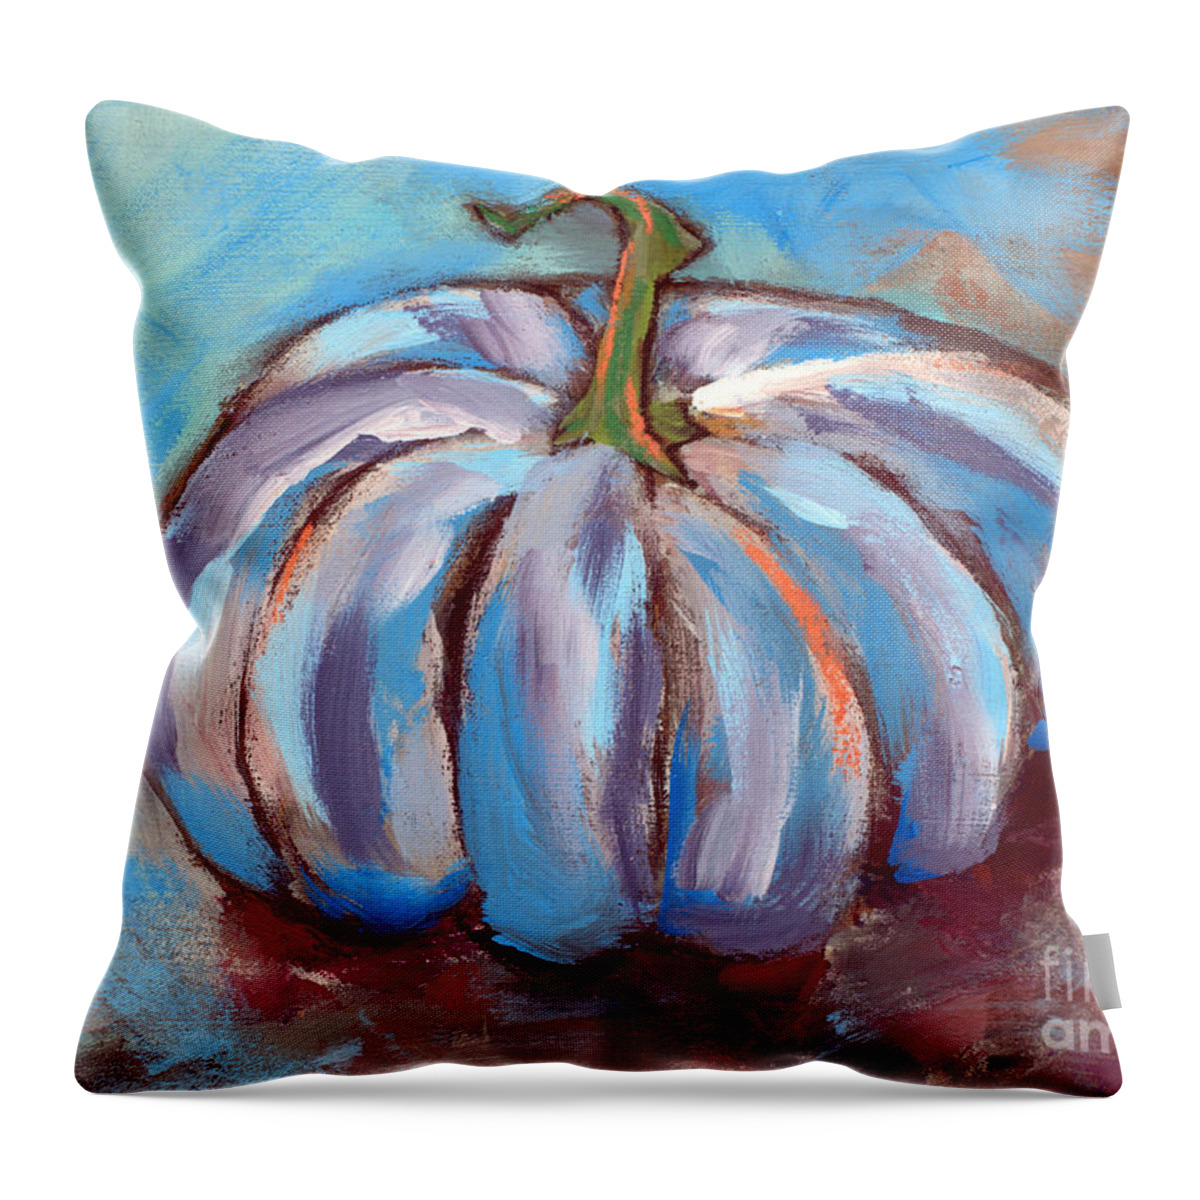 Pumpkin Throw Pillow featuring the painting Pumpkin No. 4 by David Hinds